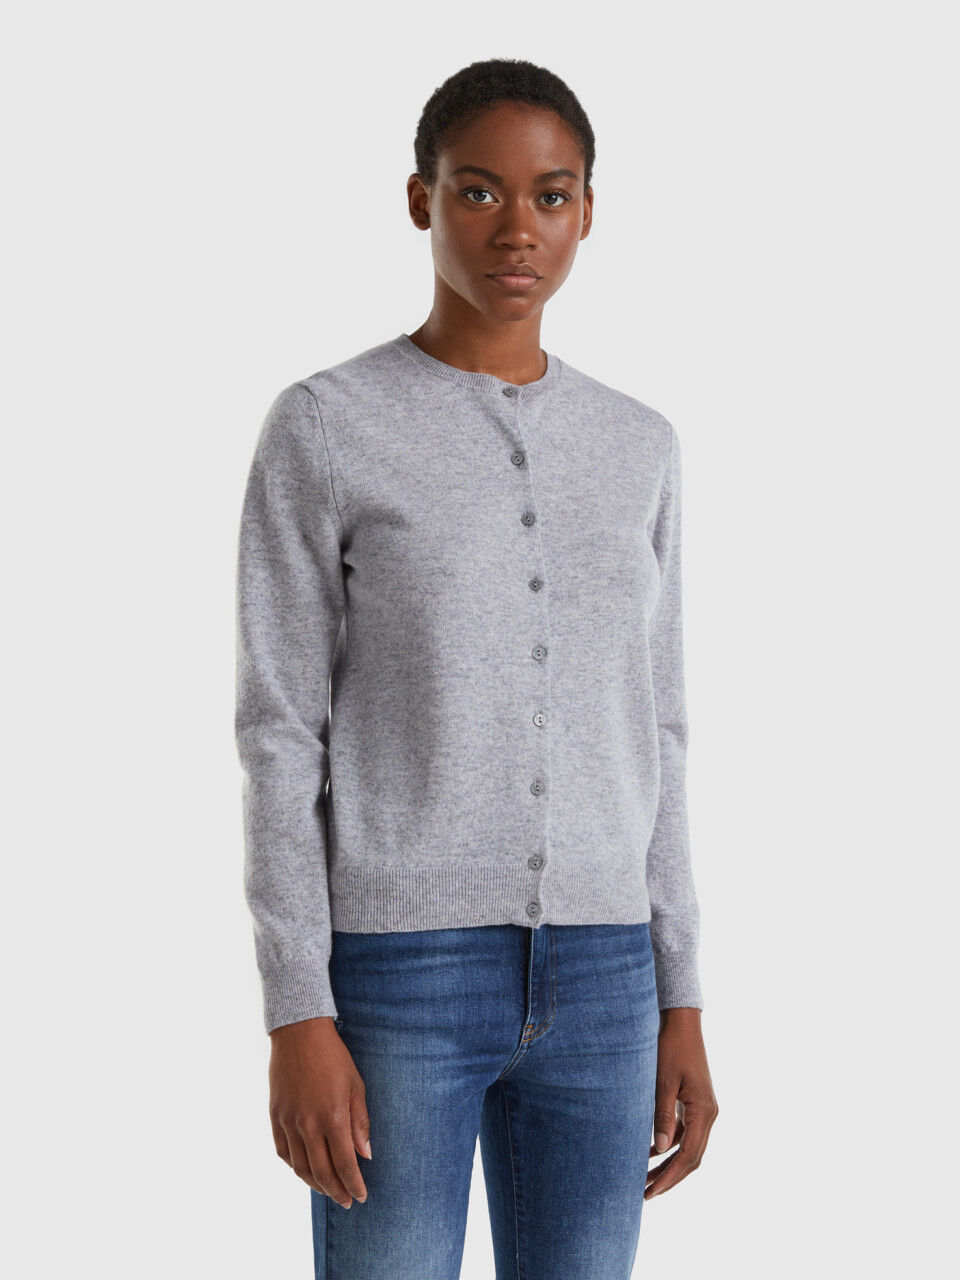 Light gray crew neck cardigan in pure Merino wool customizable